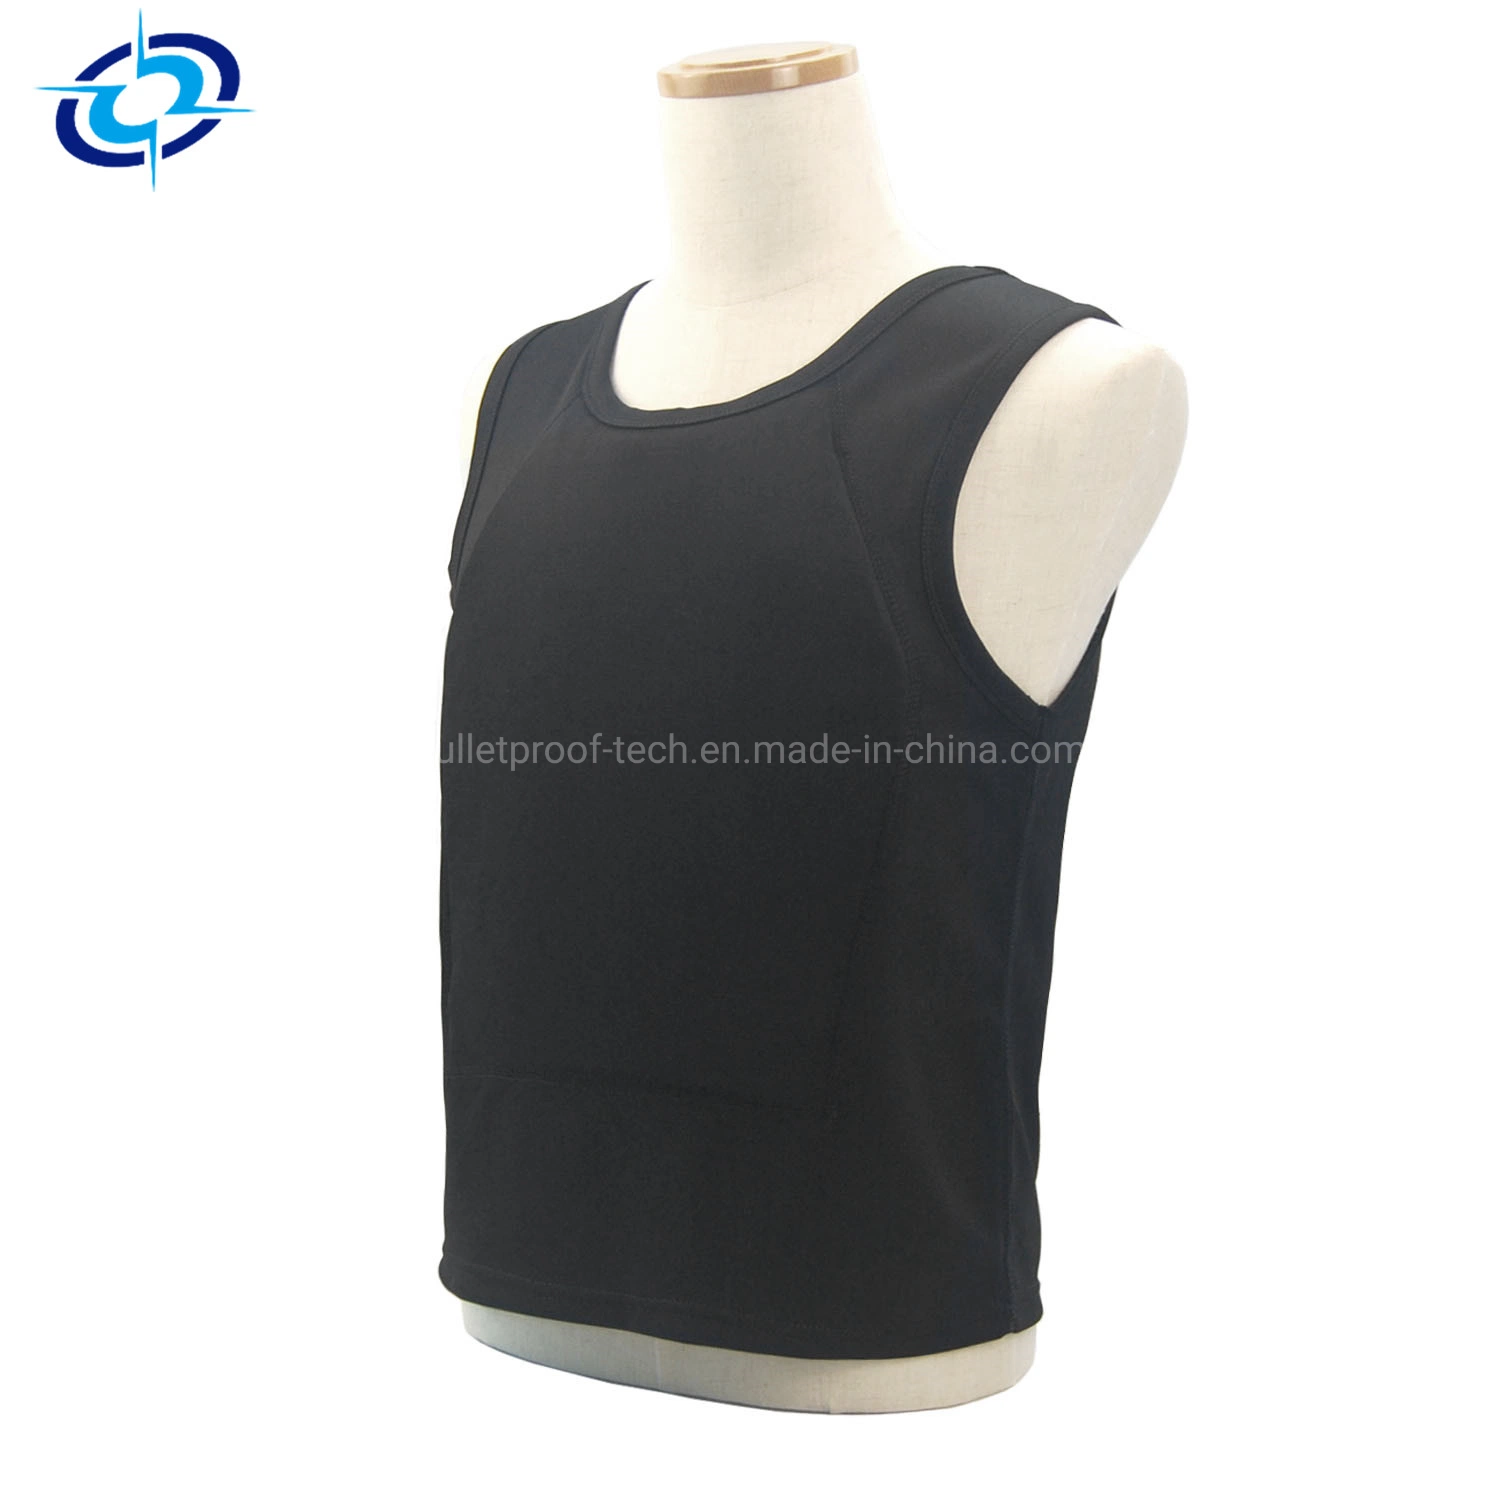 828 Black Lightweight Aramid/PE Concealed Police Combat Ballistic Bullet Proof Vest